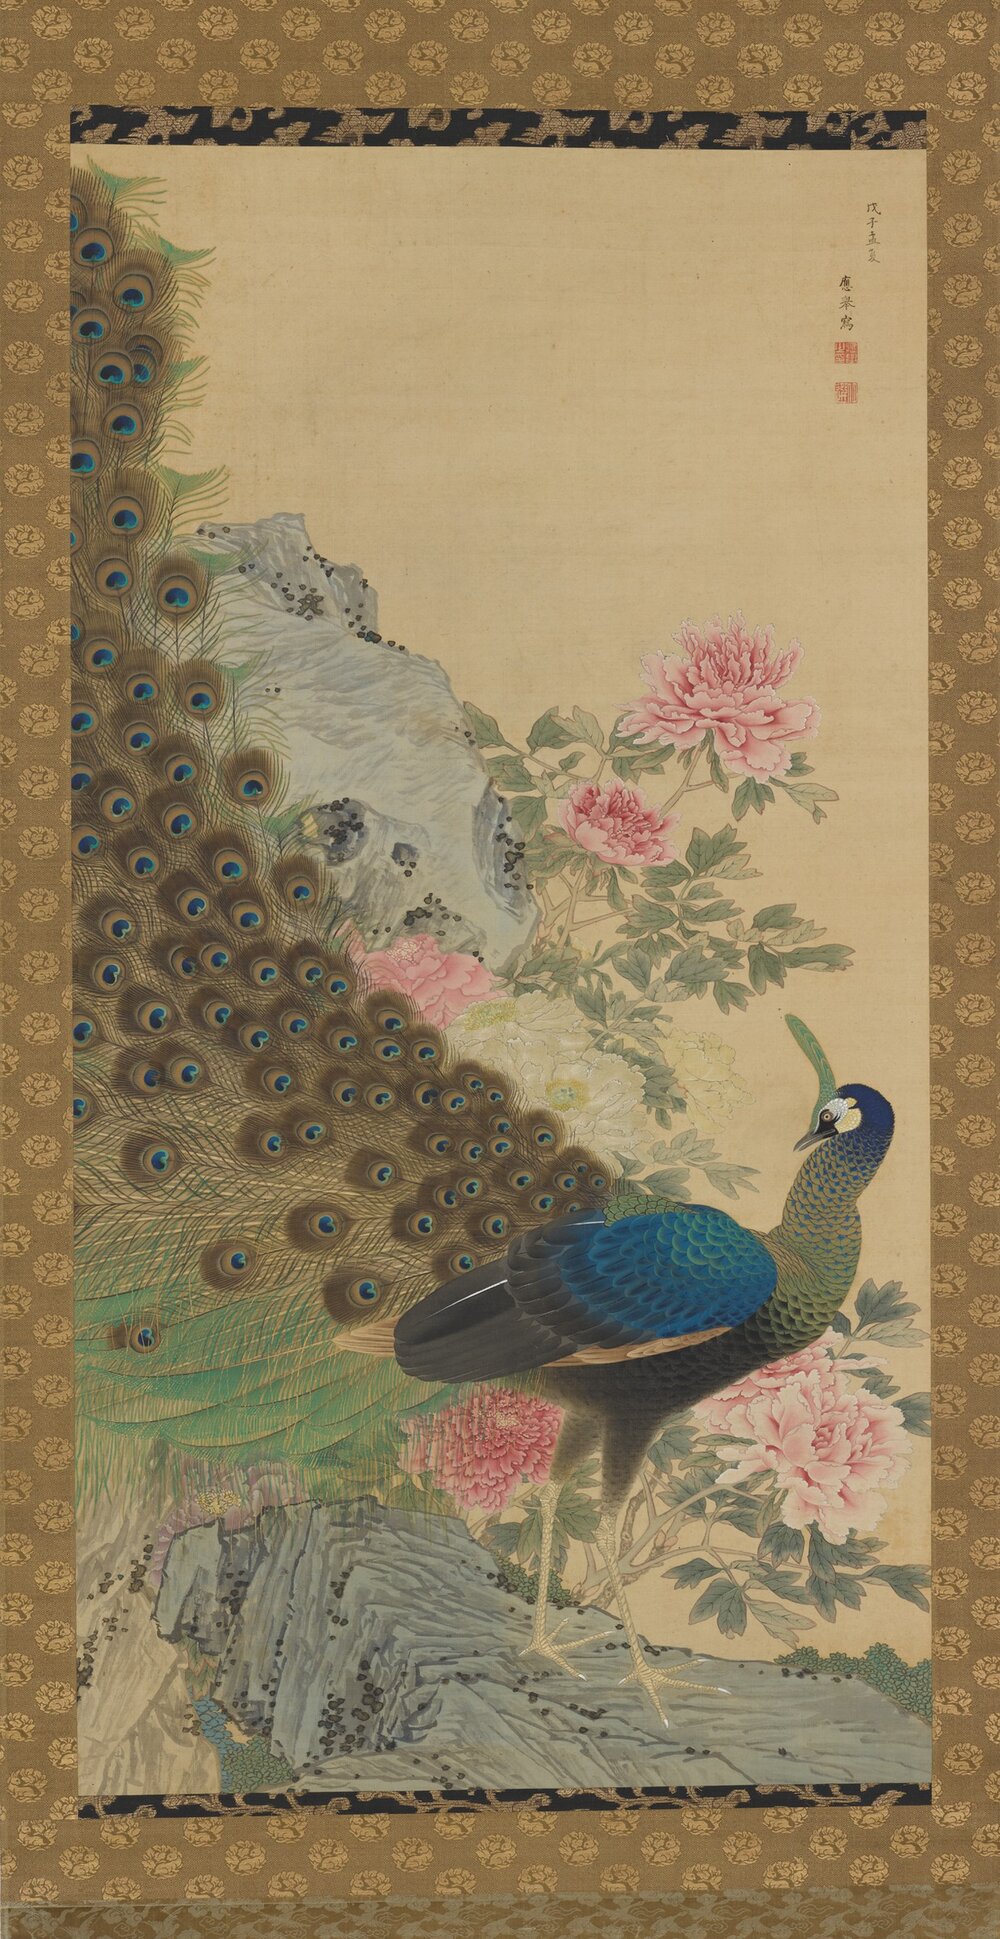 Maruyama Ōkyo 円山応挙, "Peacock and Peonies" (1768)